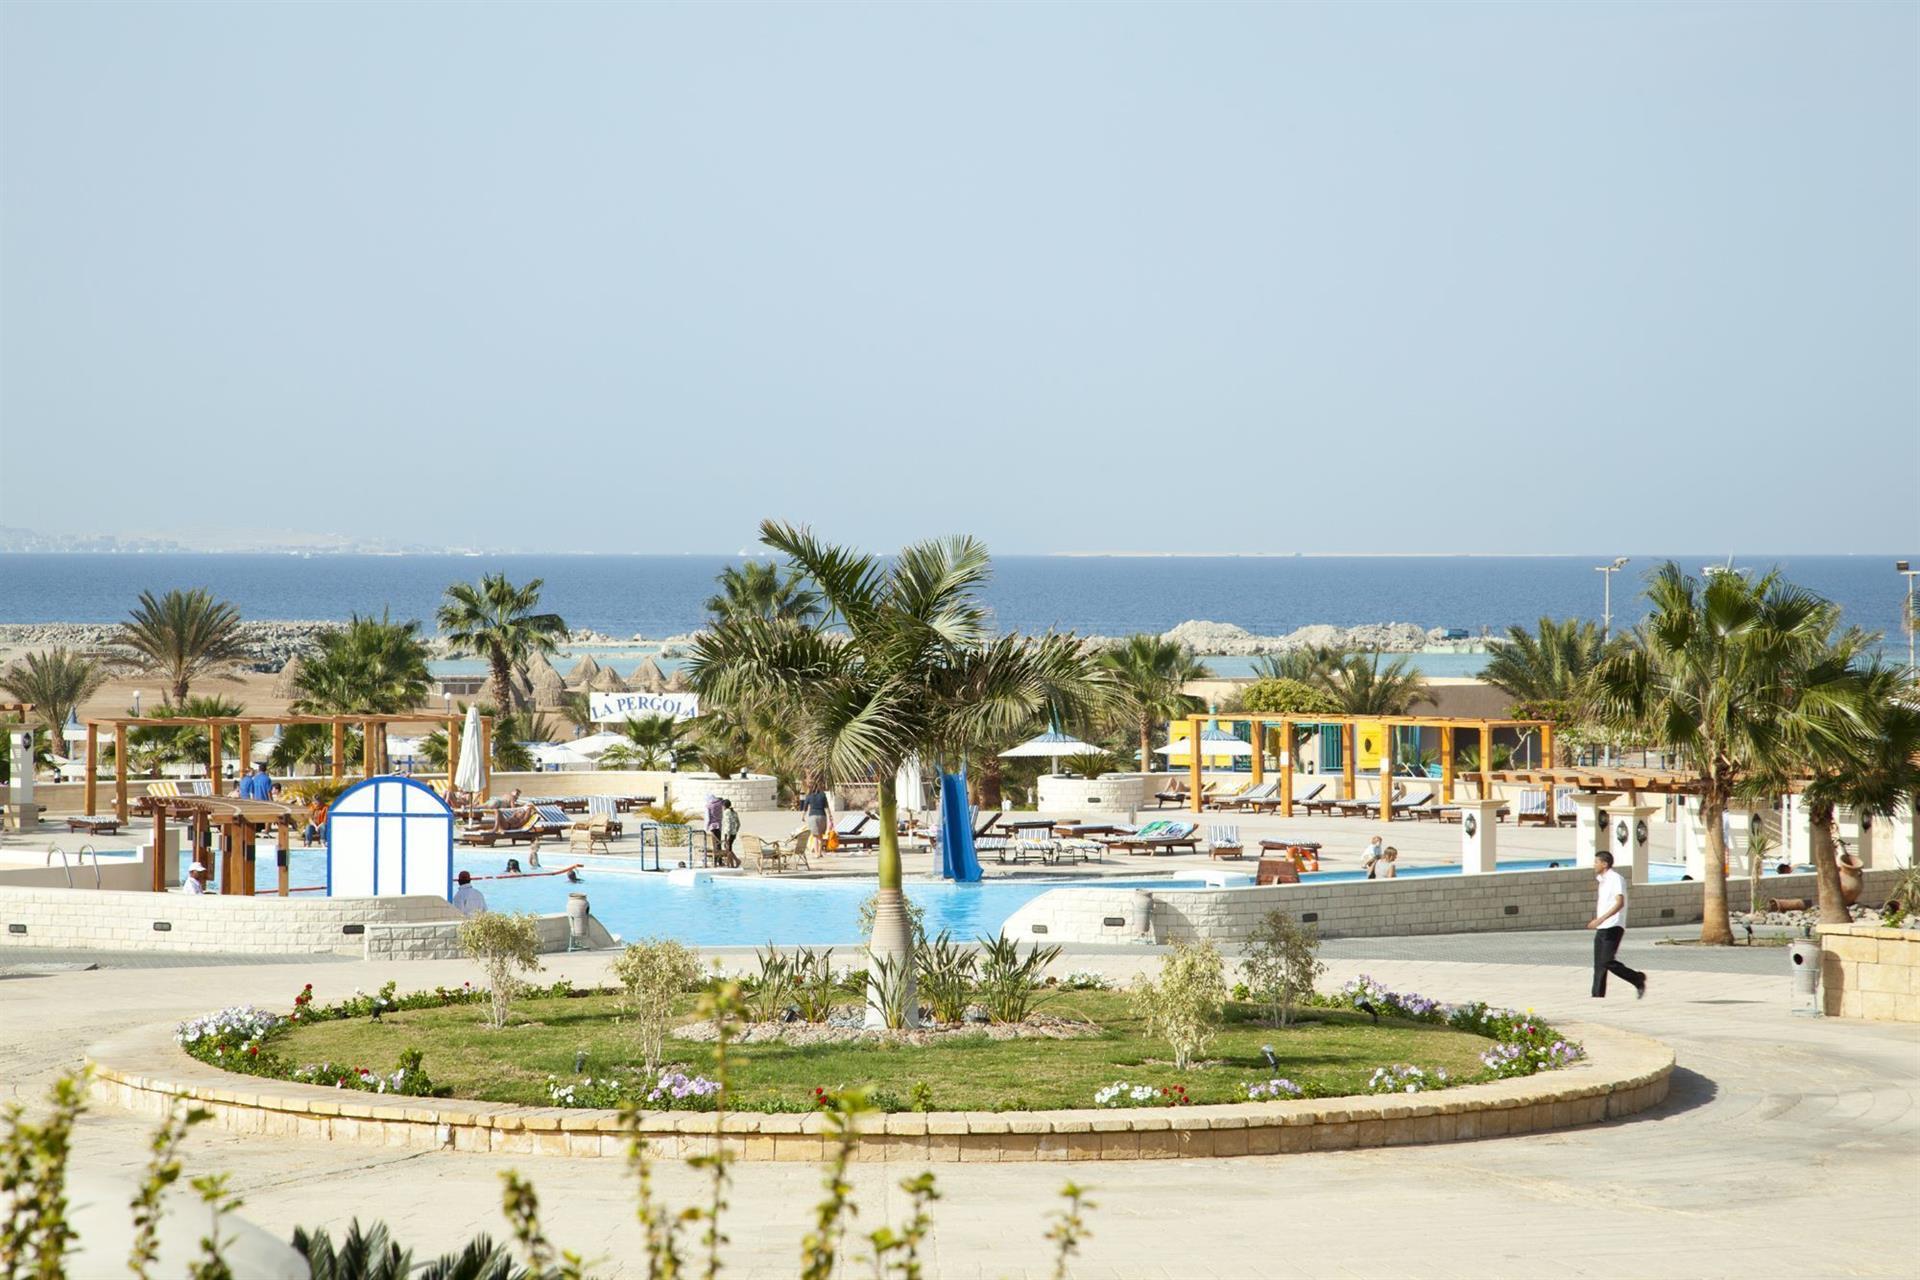 Coral beach 4 хургада. Coral Beach Rotana Resort 4 Египет Хургада. Отель Coral Beach Hotel Hurghada. Отель Корал Бич Хургада Египет. Отель Корал Бич ротана Резорт Хургада.